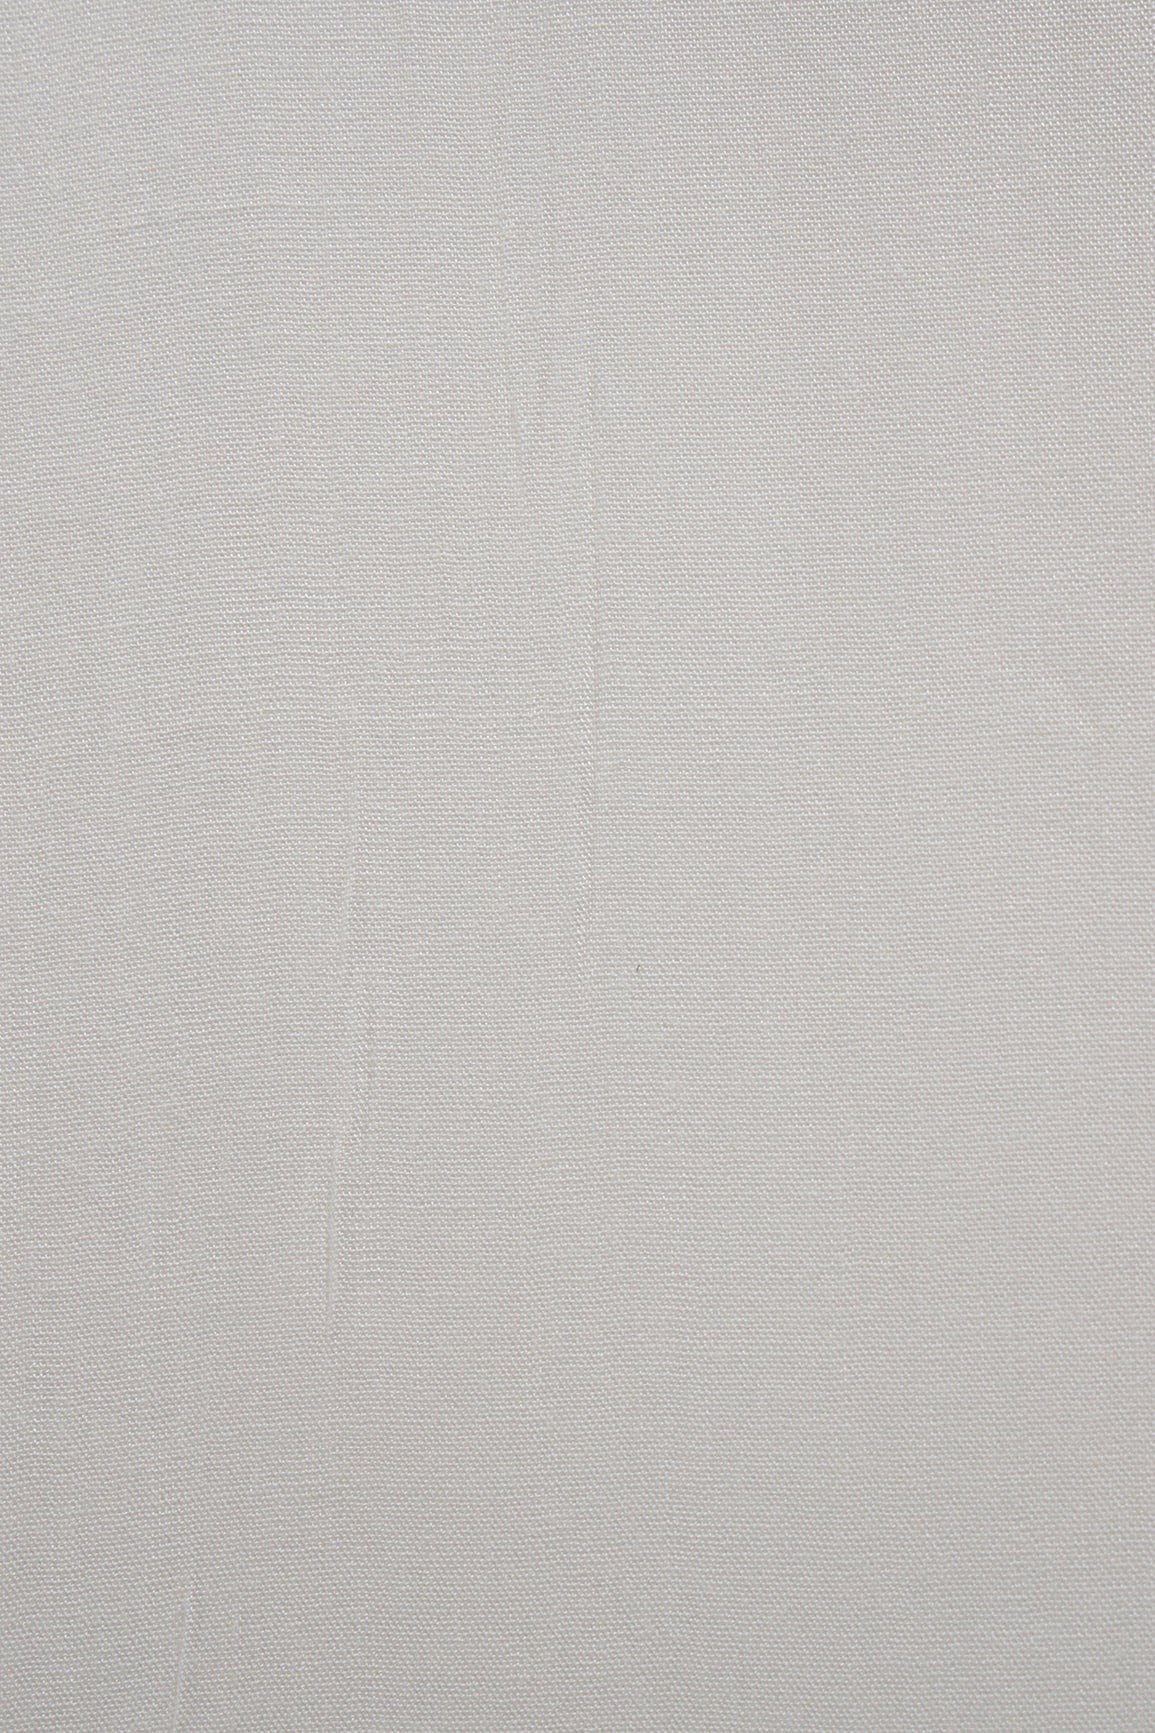 doeraa Plain Fabrics White Dyed Muslin Fabric